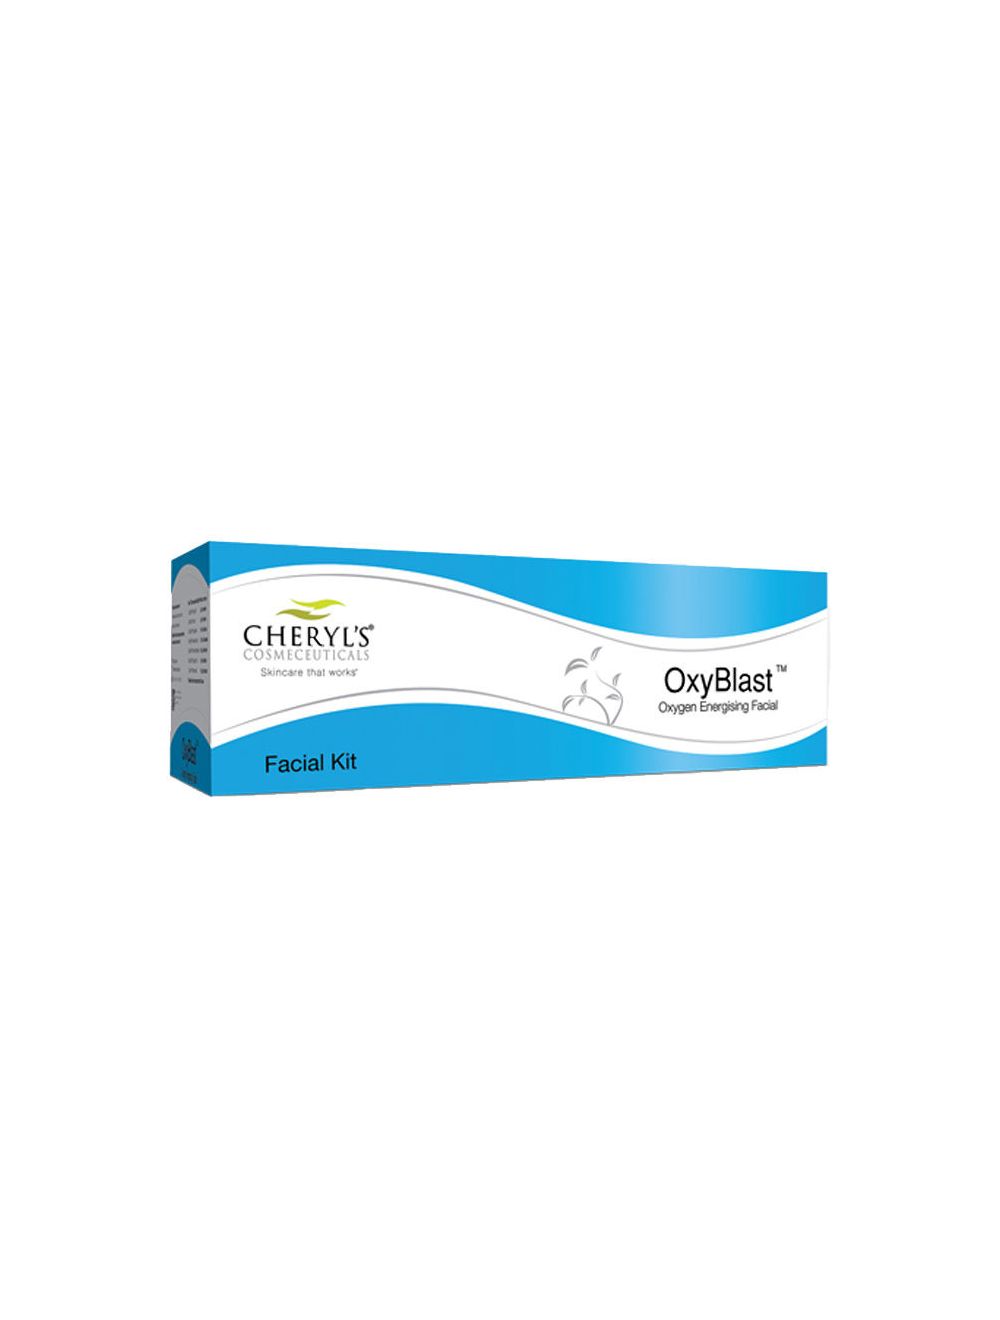 Cheryl's OxyBlast Oxygen Energizing Facial Kit (Pack of 24)